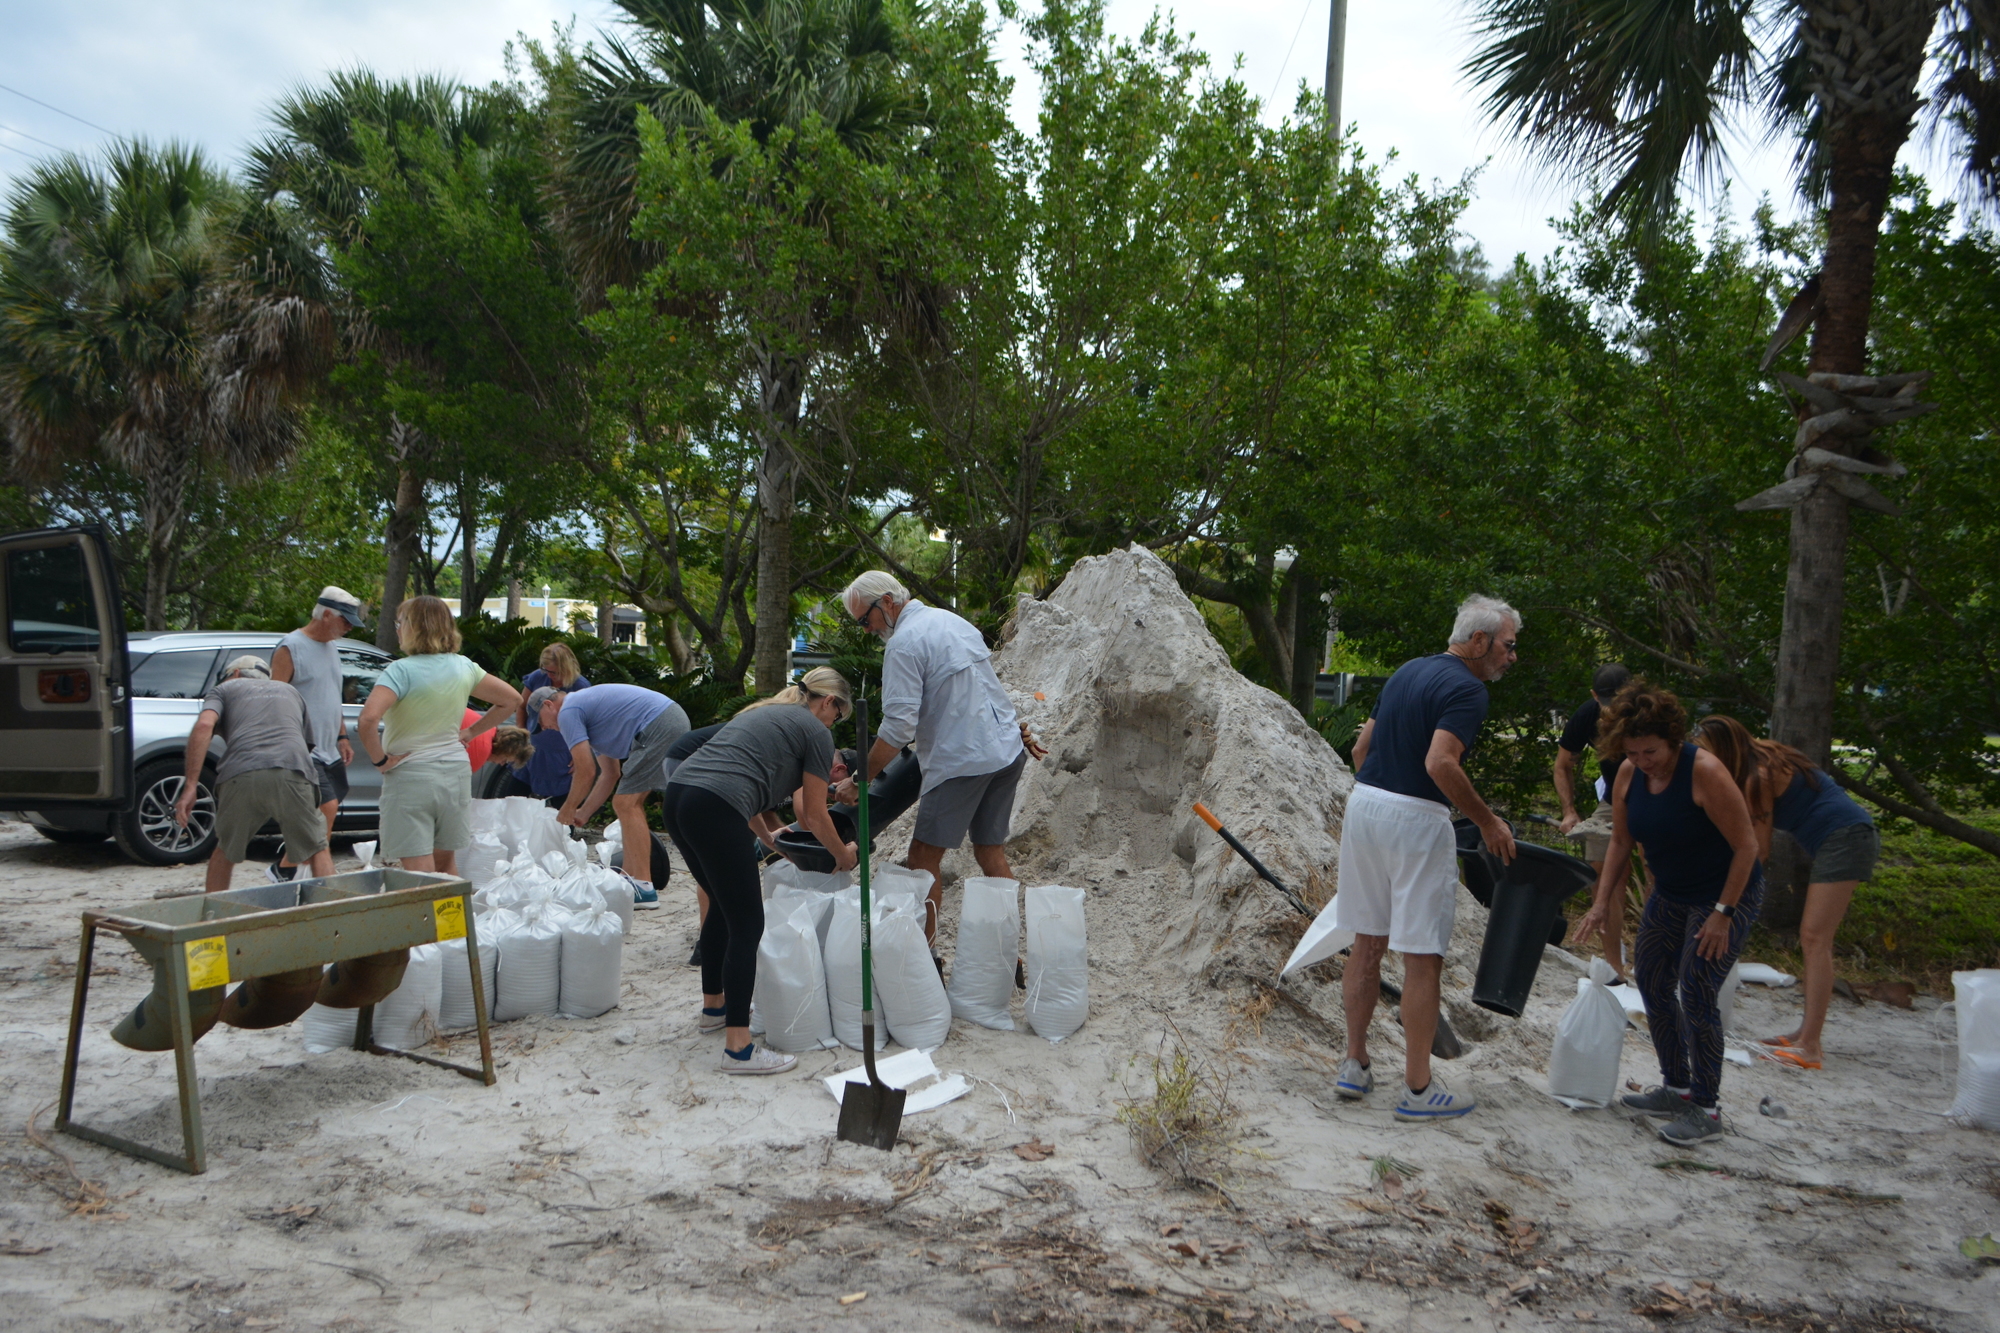 Residents fill sandbags on Sunday. (Photo by Lauren Tronstad)